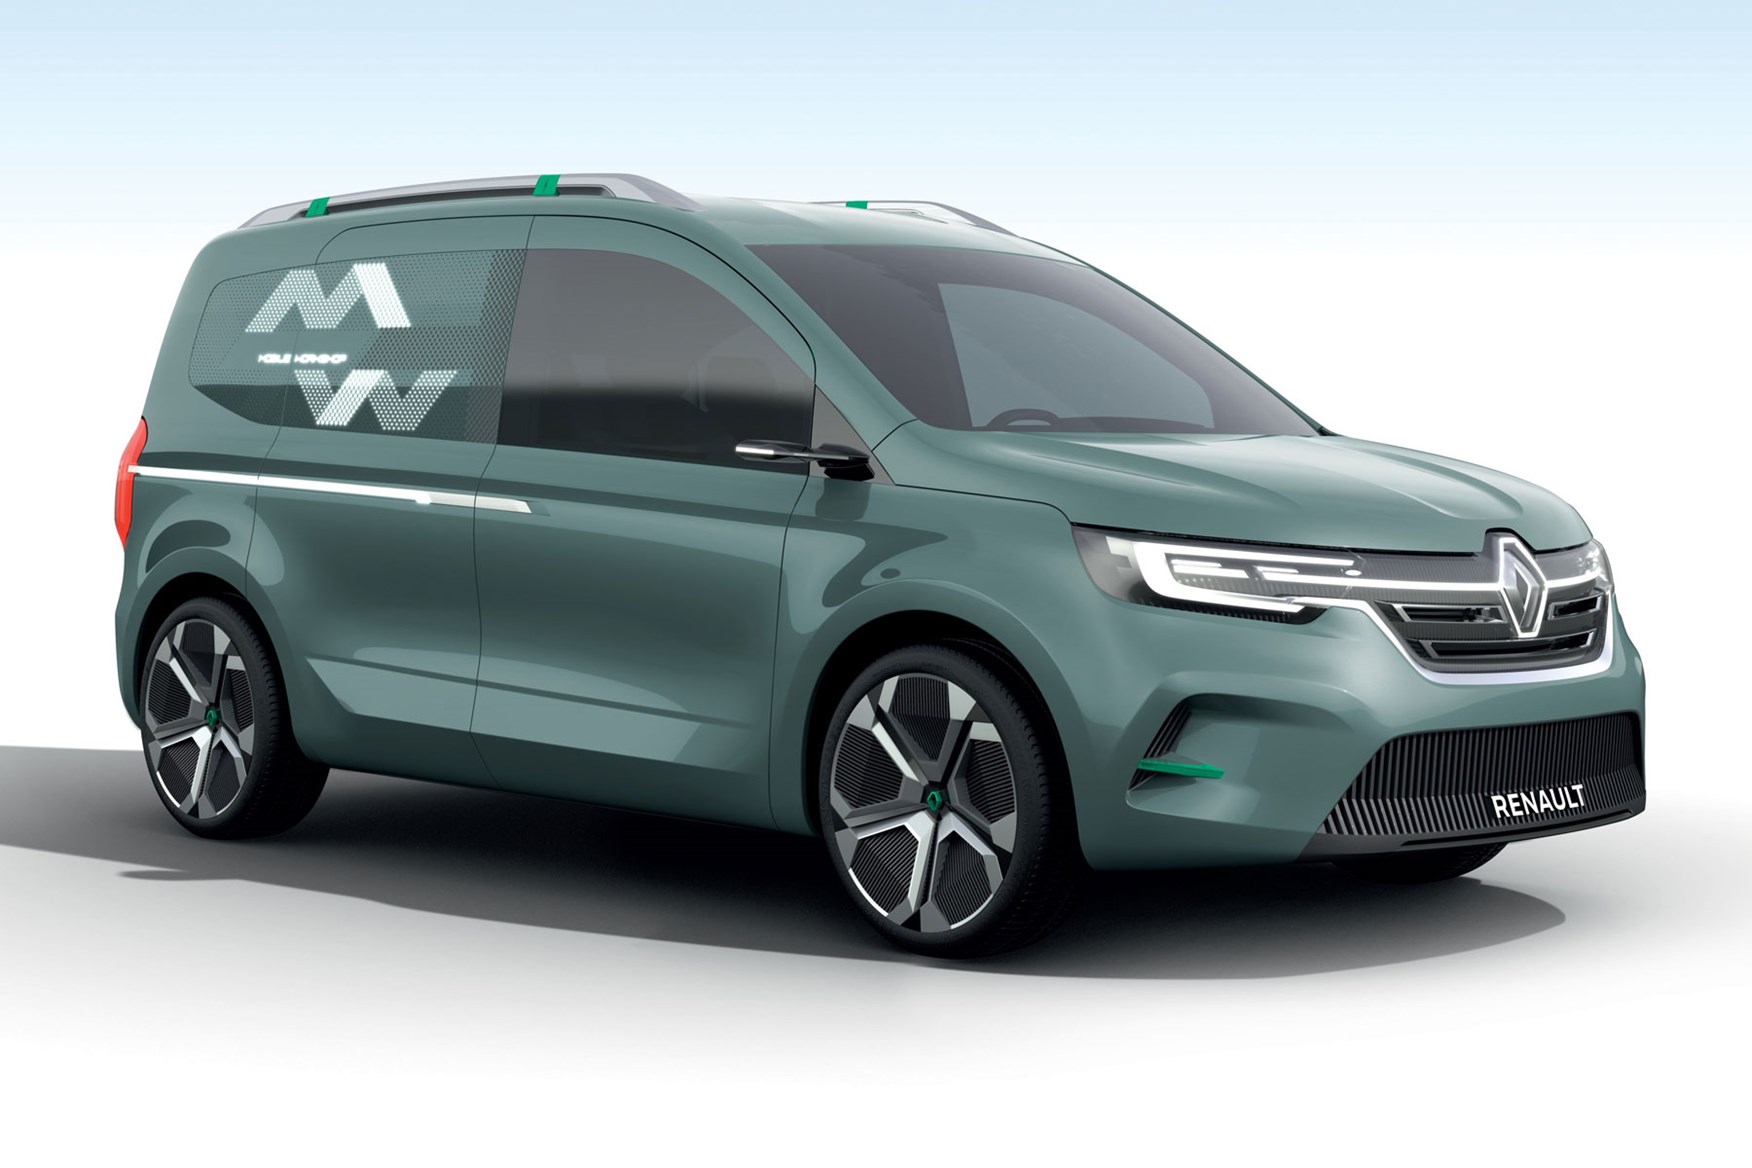 Renault Kangoo ZE concept for 2020-2021